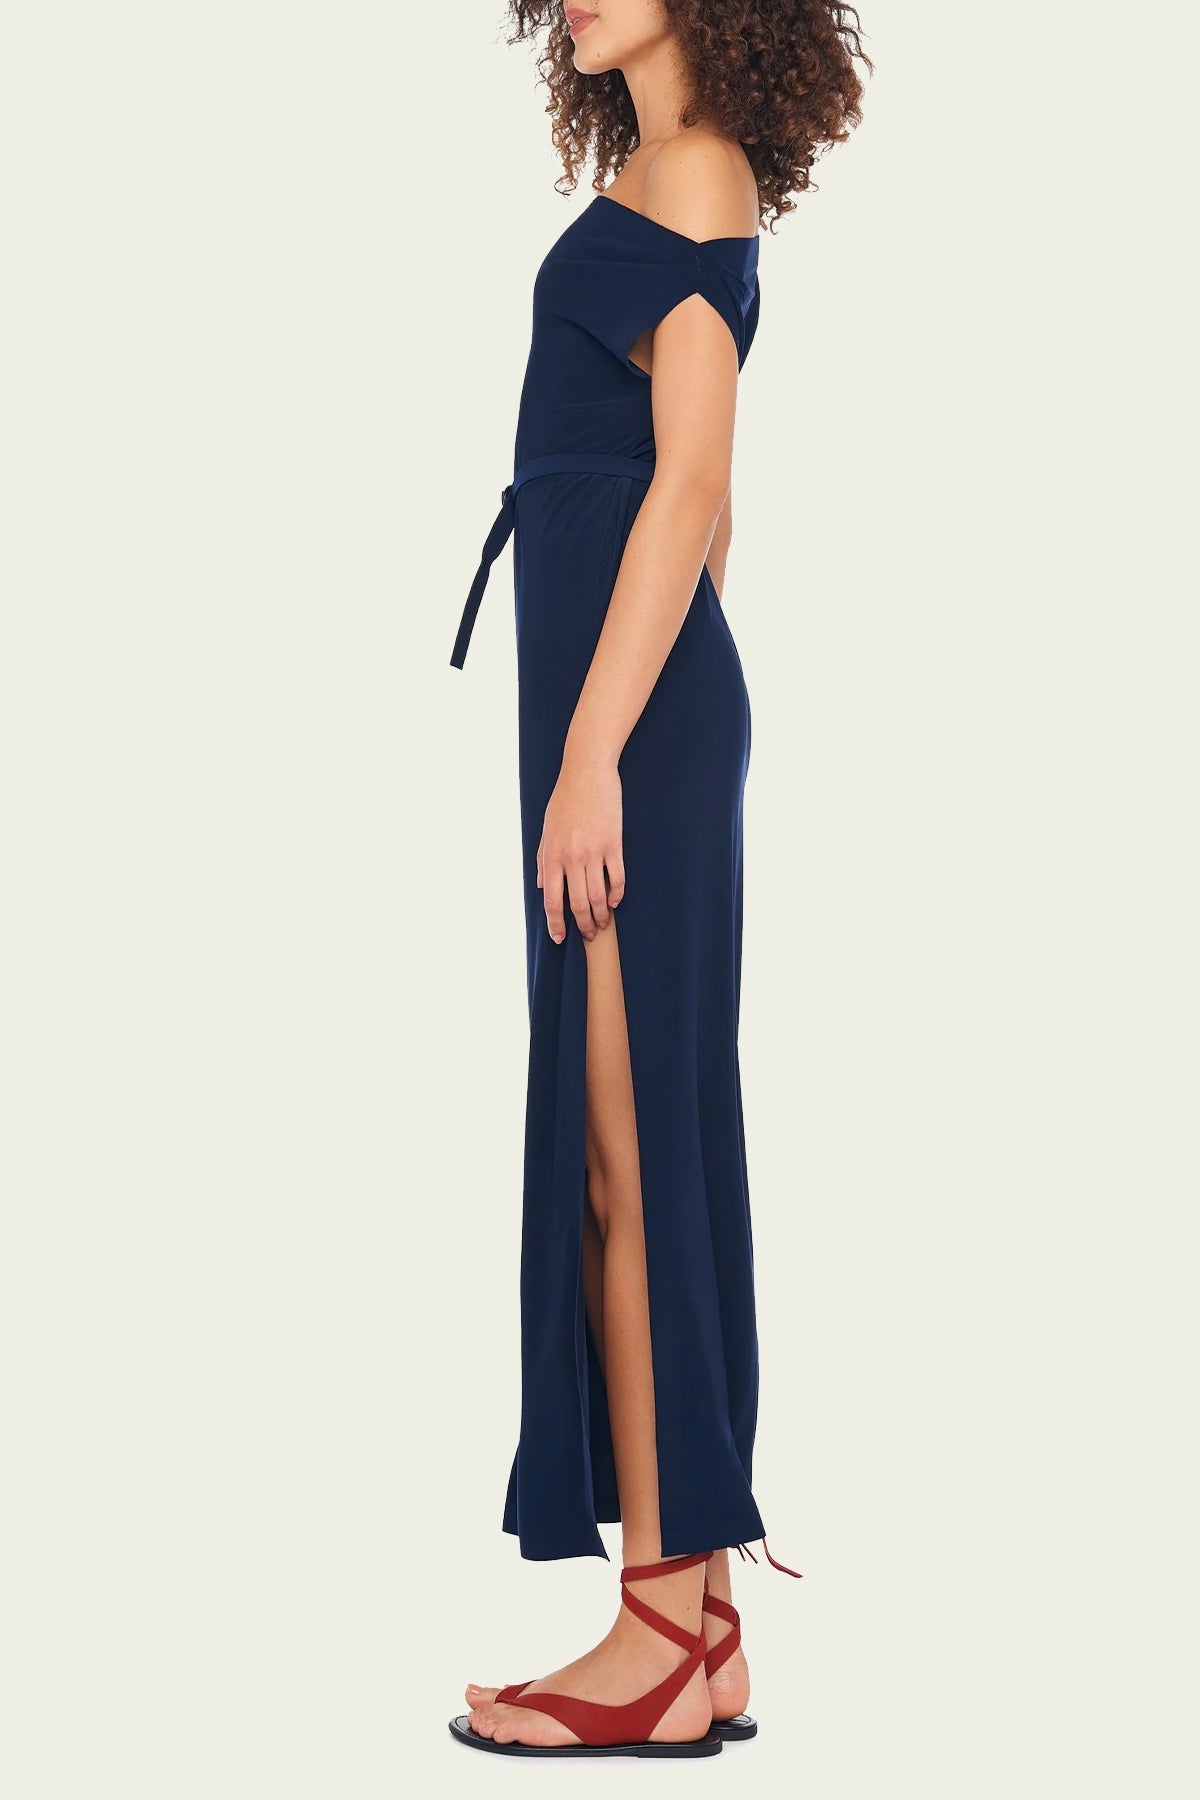 Drop Shoulder Gown in True Navy - shop-olivia.com